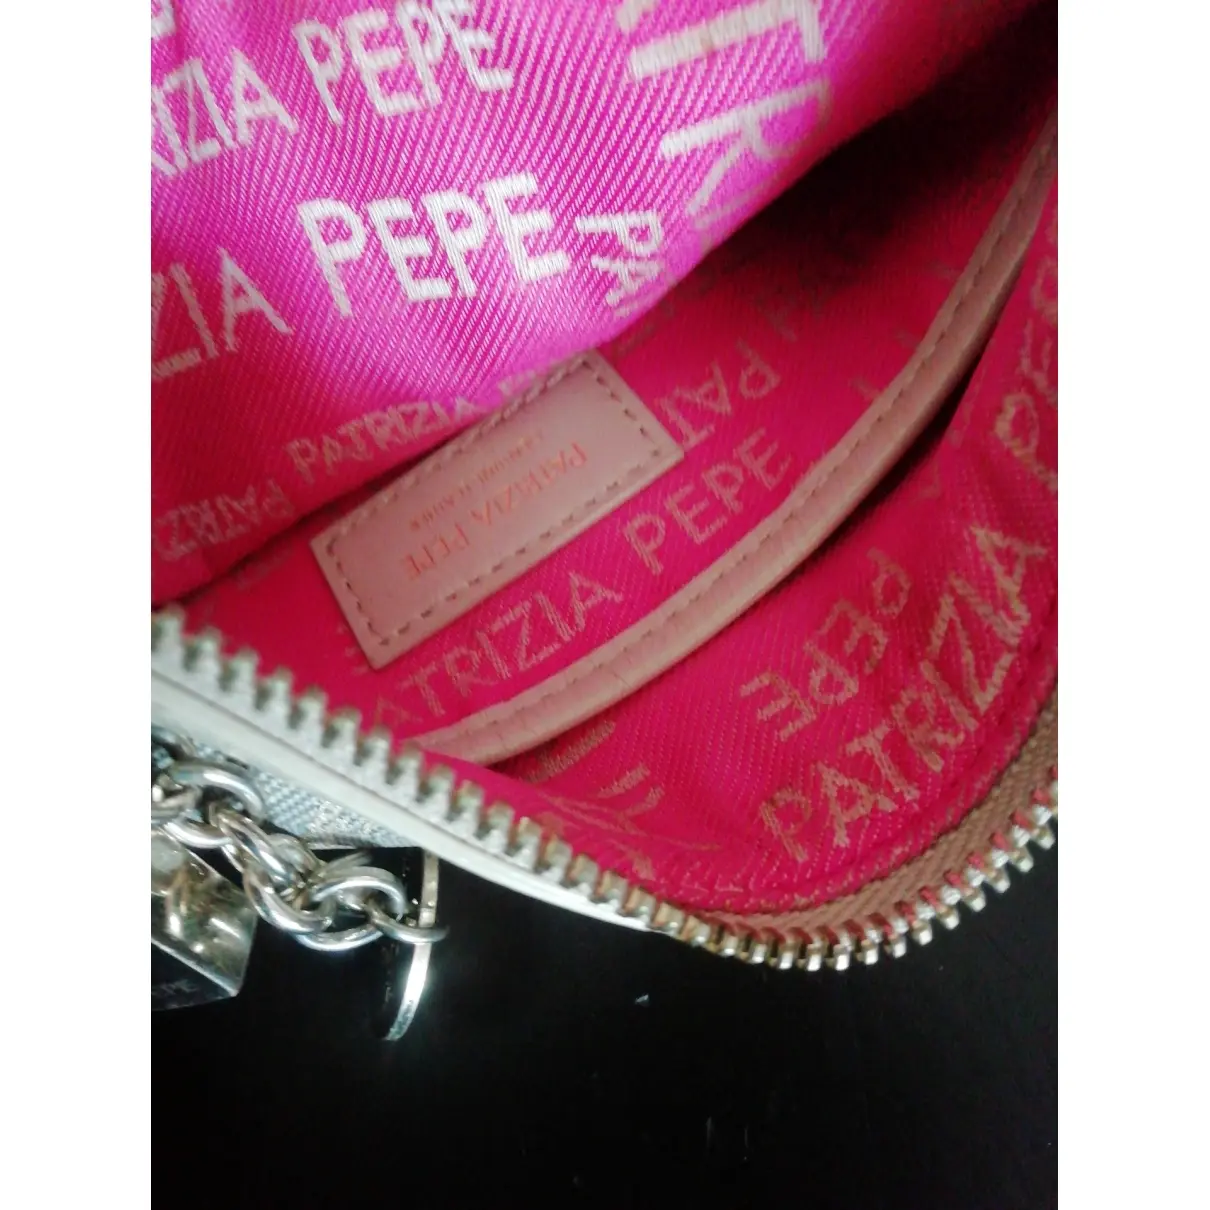 Buy Patrizia Pepe Handbag online